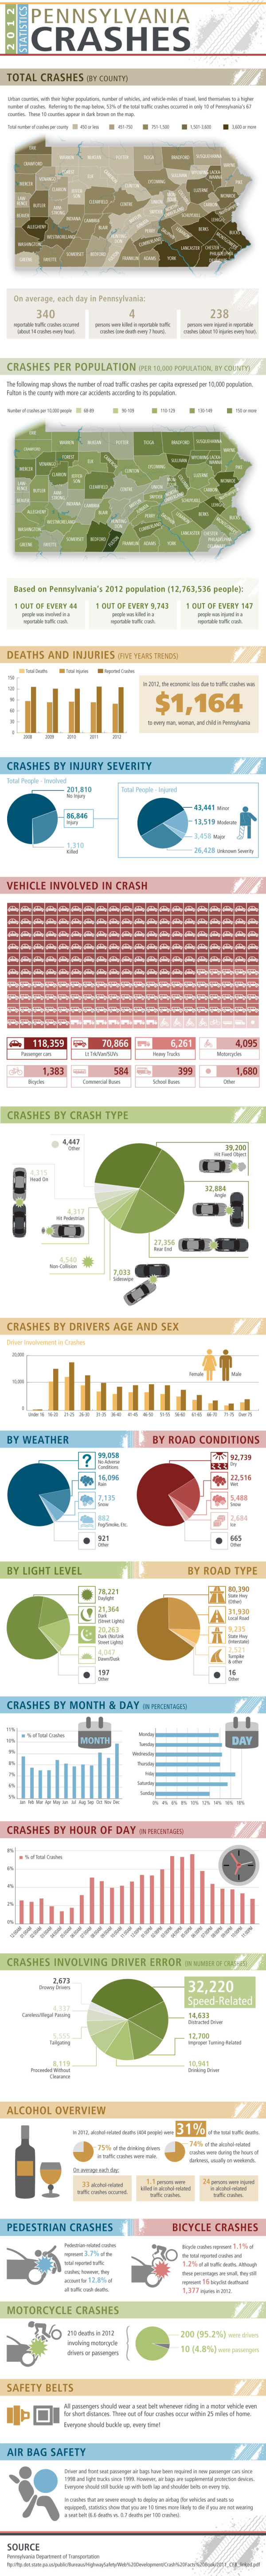 2012 Statistics: Pennsylvania Crashes infographic